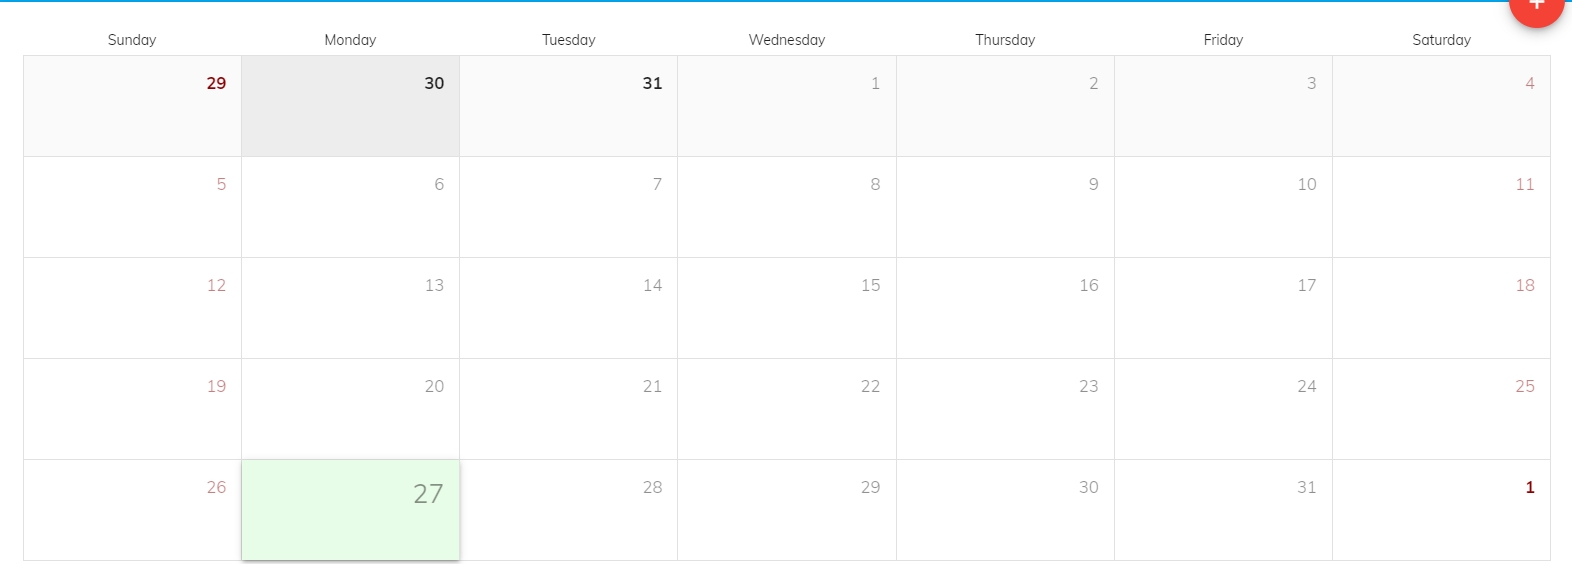 disabling future days using angular mwl calendar month view